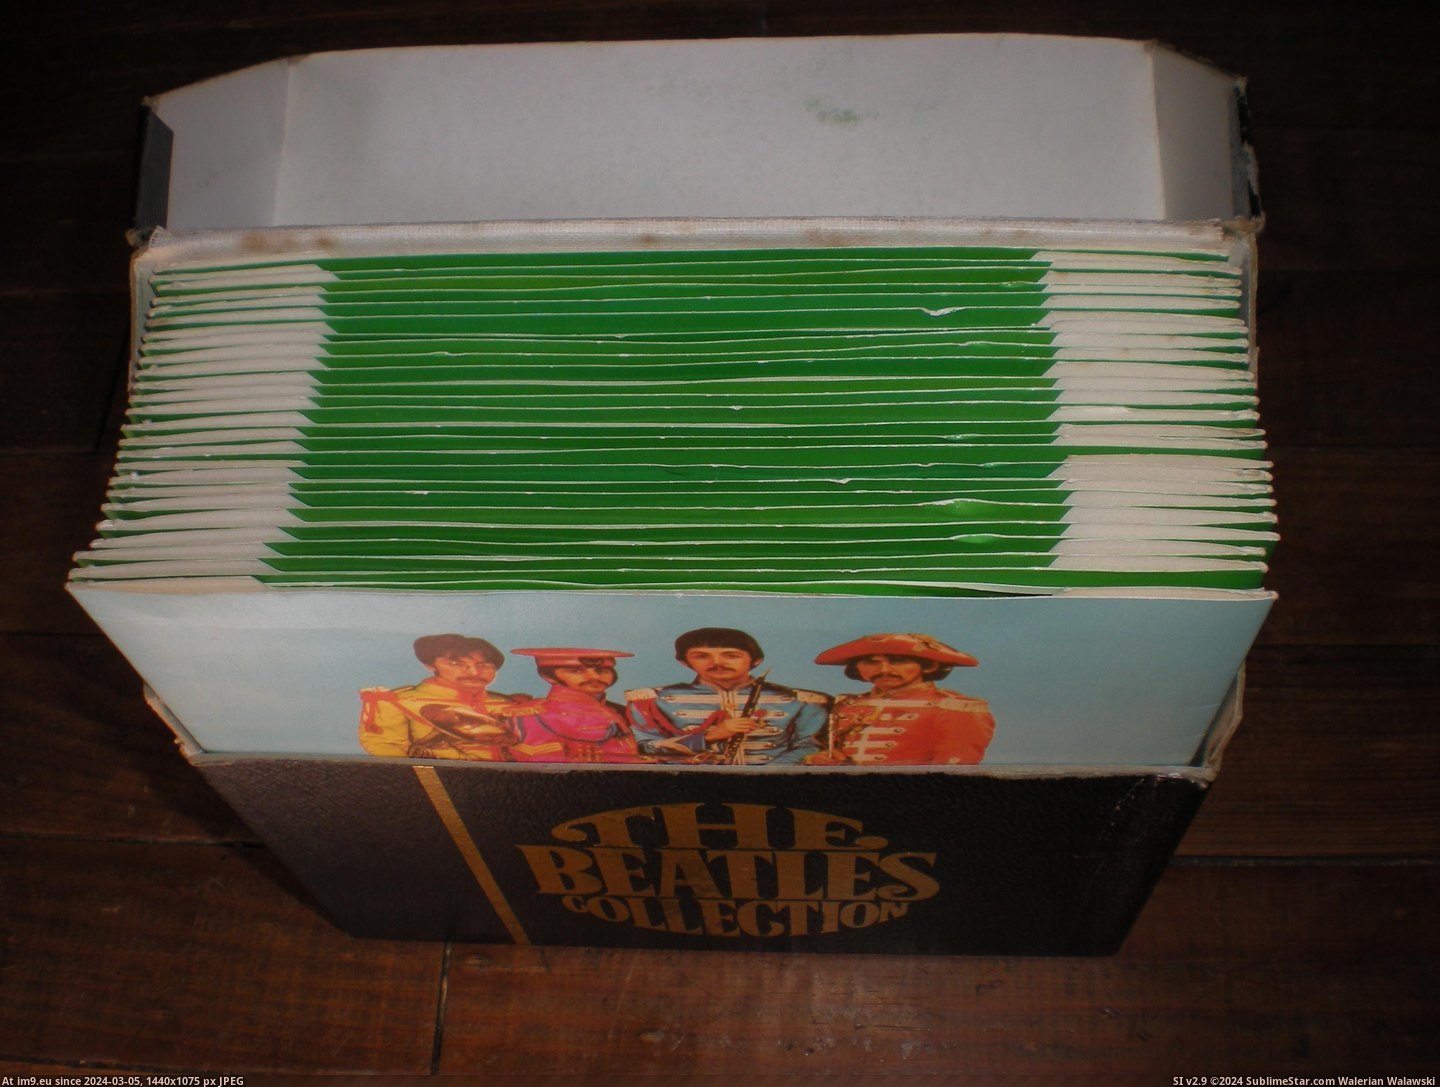 #Collection #Beatles #Box Beatles Collection Box 3 Pic. (Bild von album new 1))